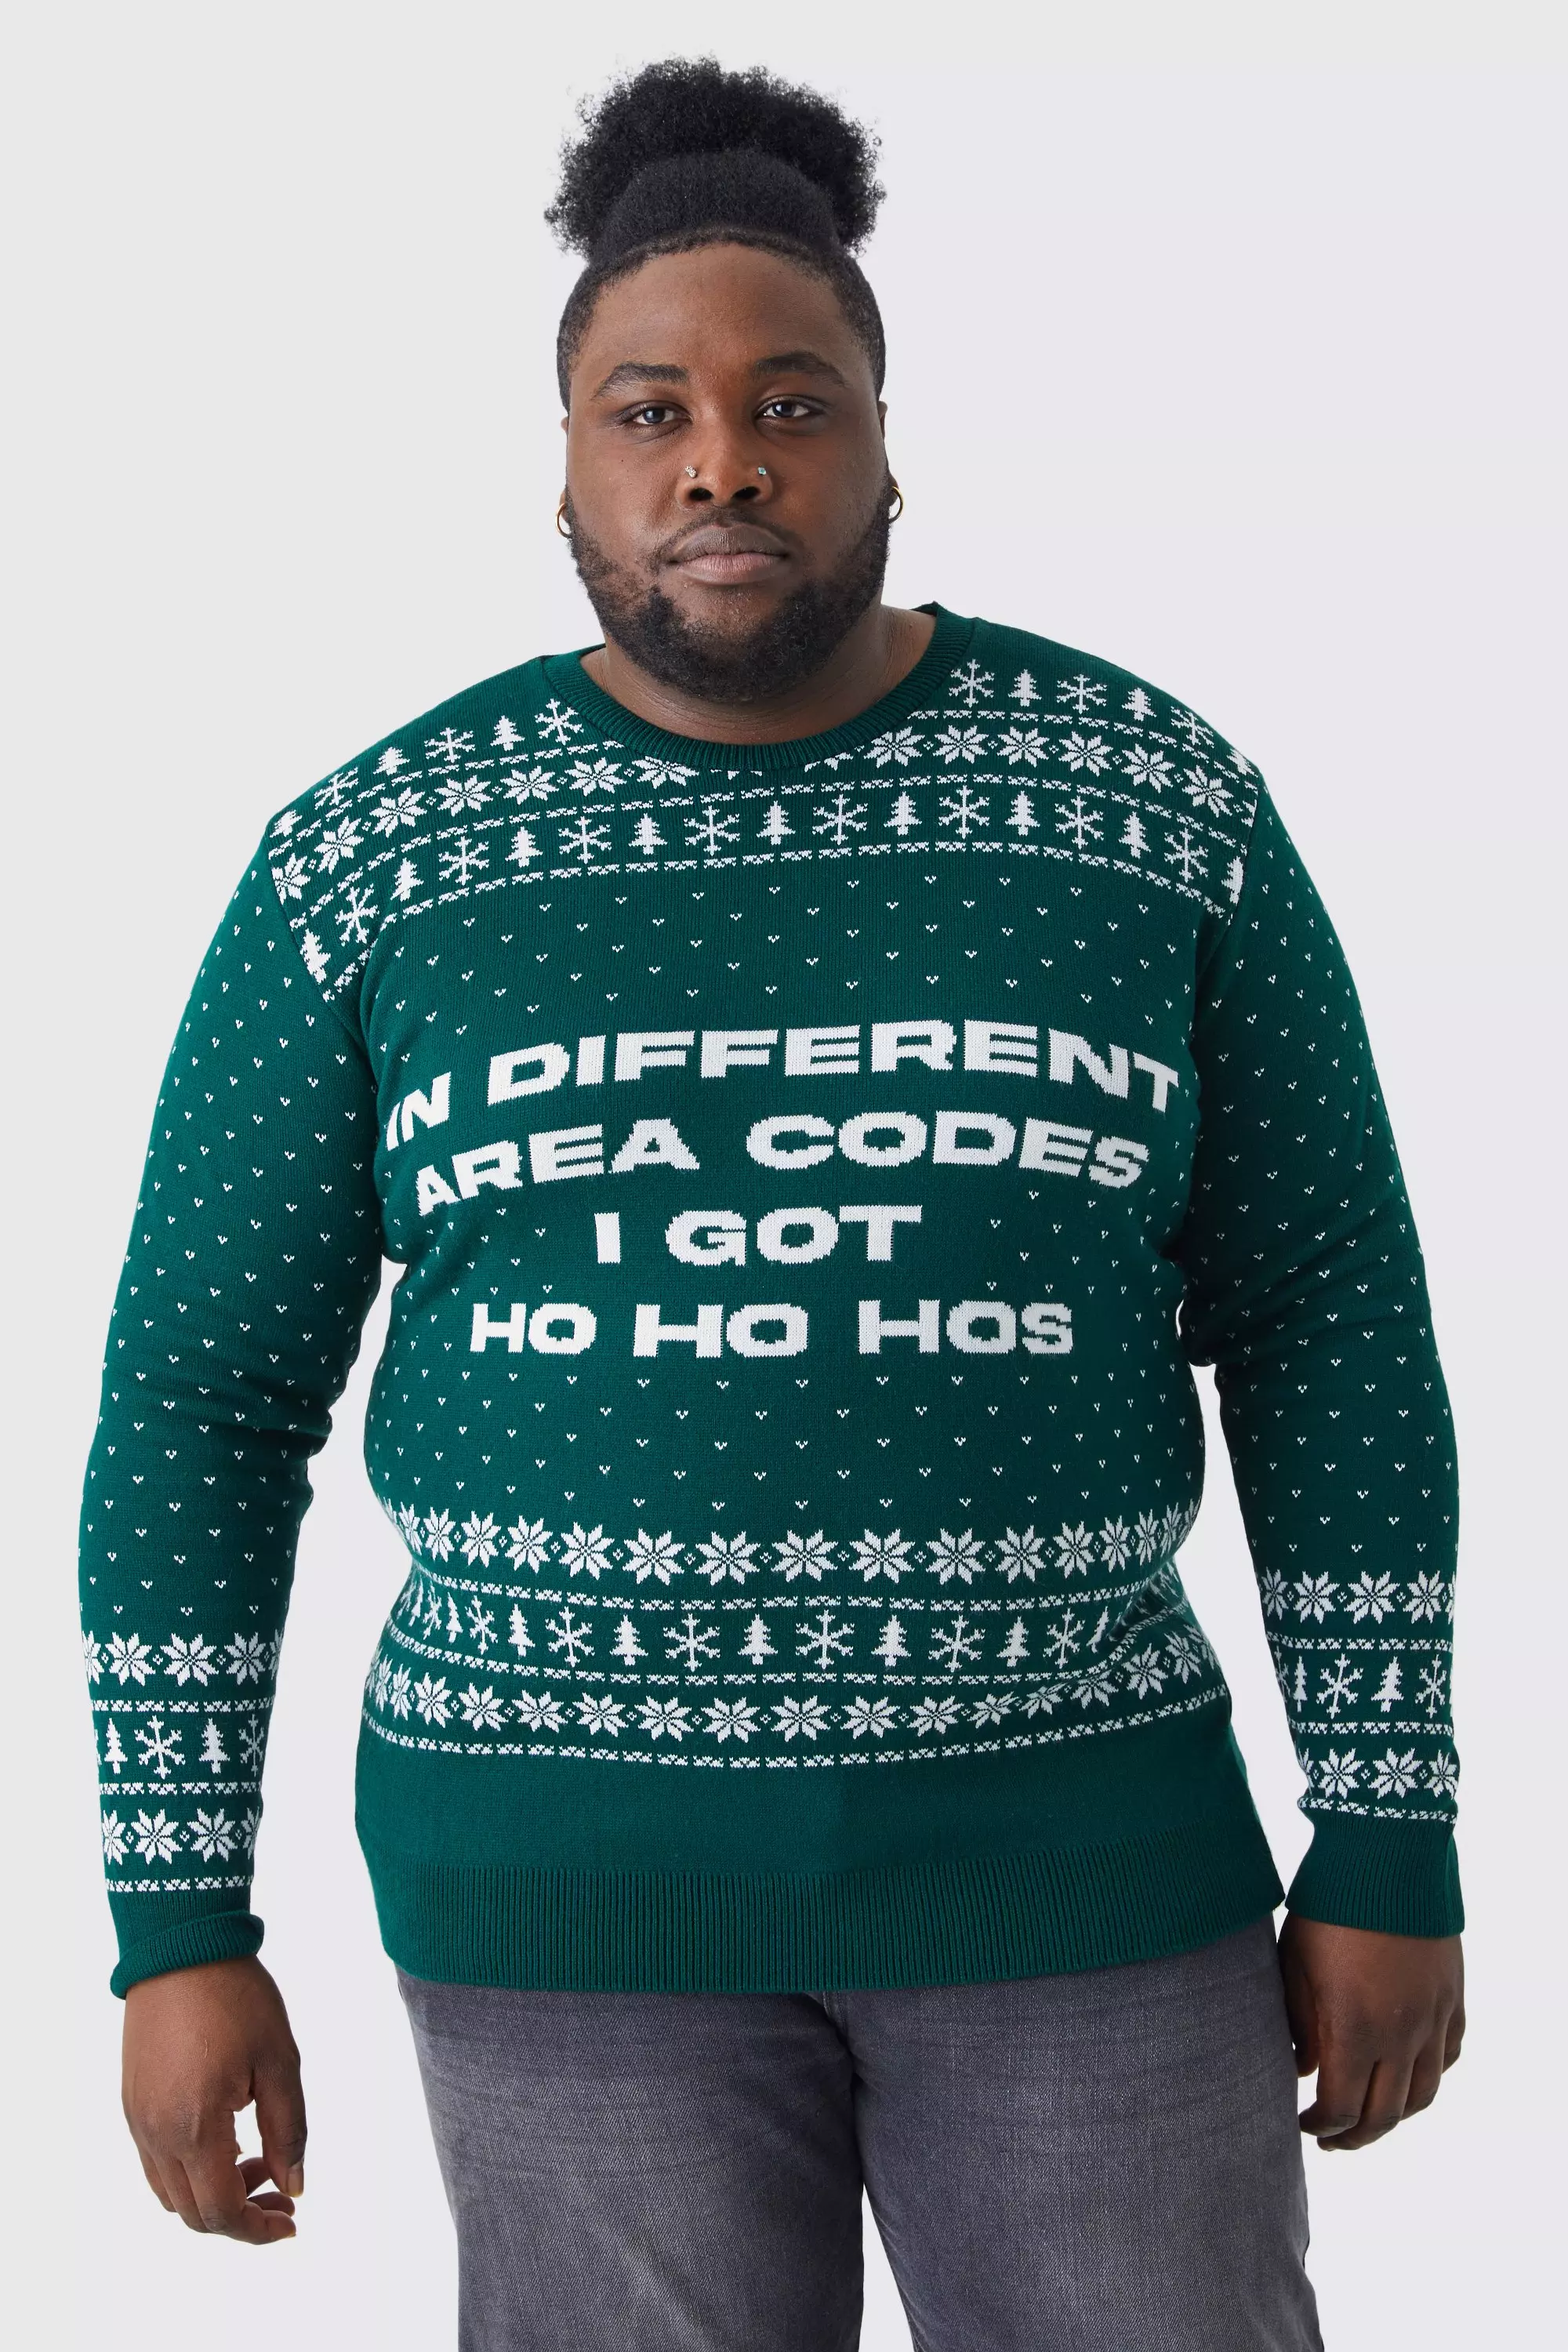 Plus I Got Ho Ho Hos Christmas Sweater Green